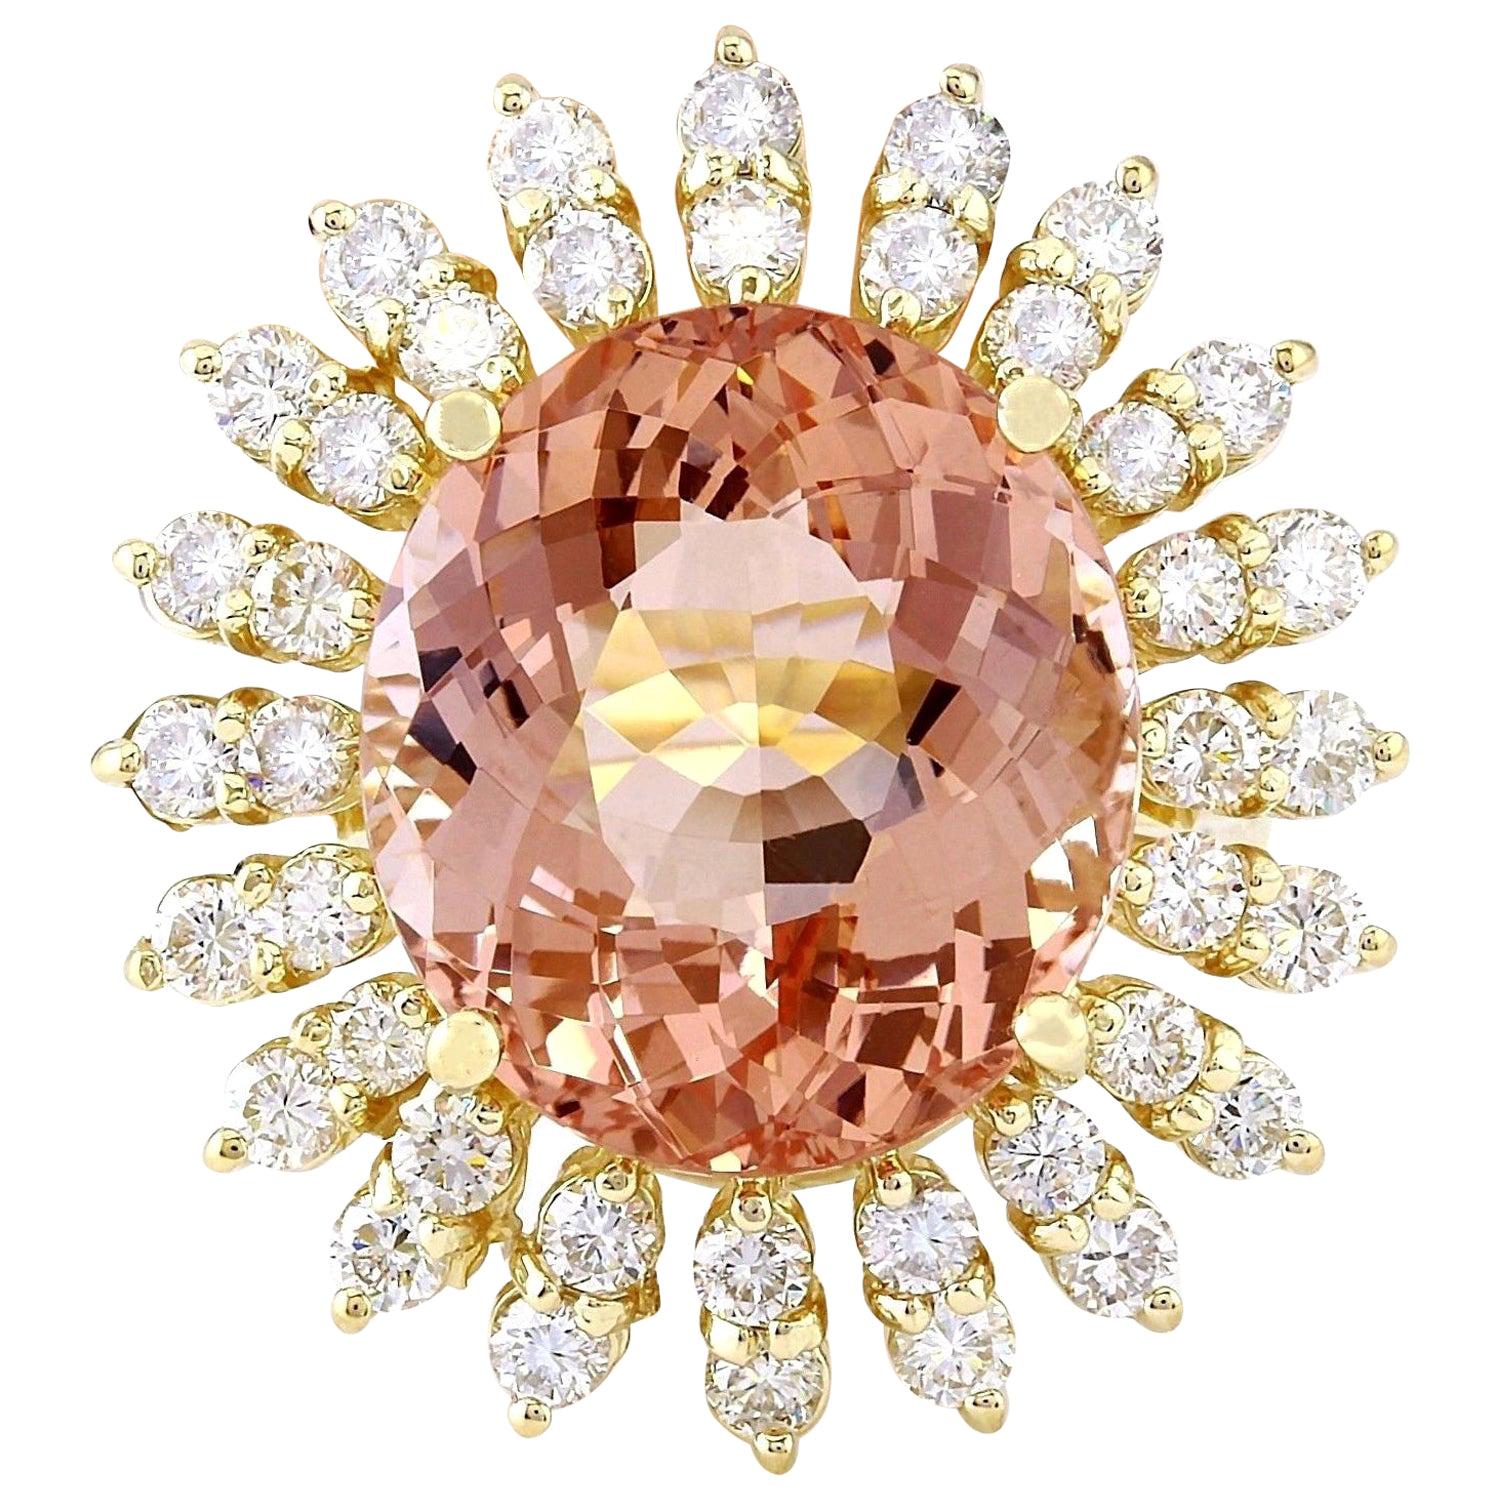 Natural Morganite Diamond Ring In 14 Karat Solid Yellow Gold  For Sale